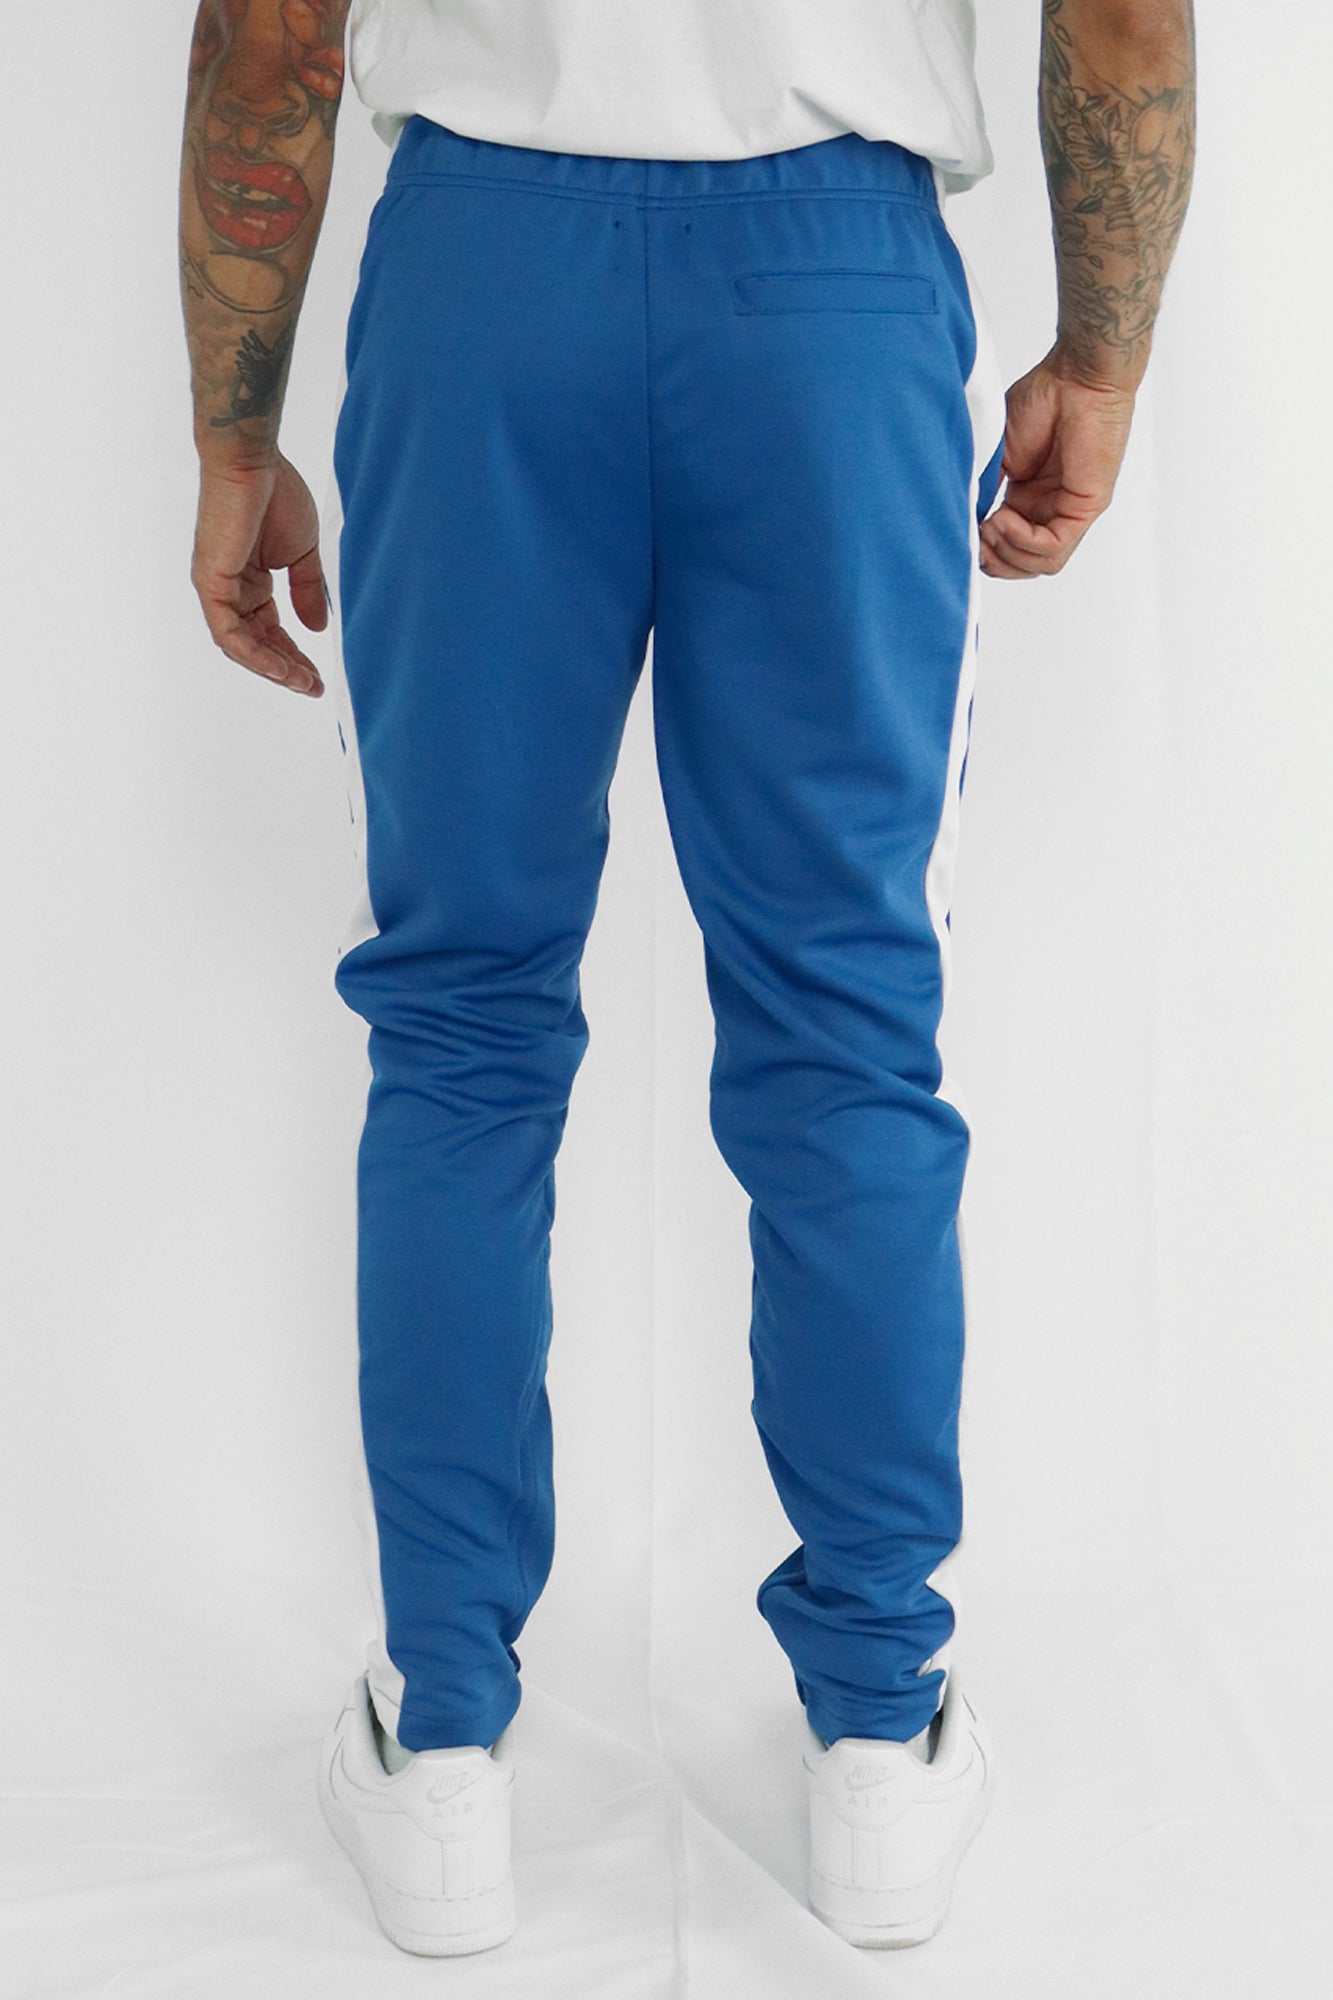 Premium Side Stripe Zip Pocket Track Pants (Royal Blue-White)